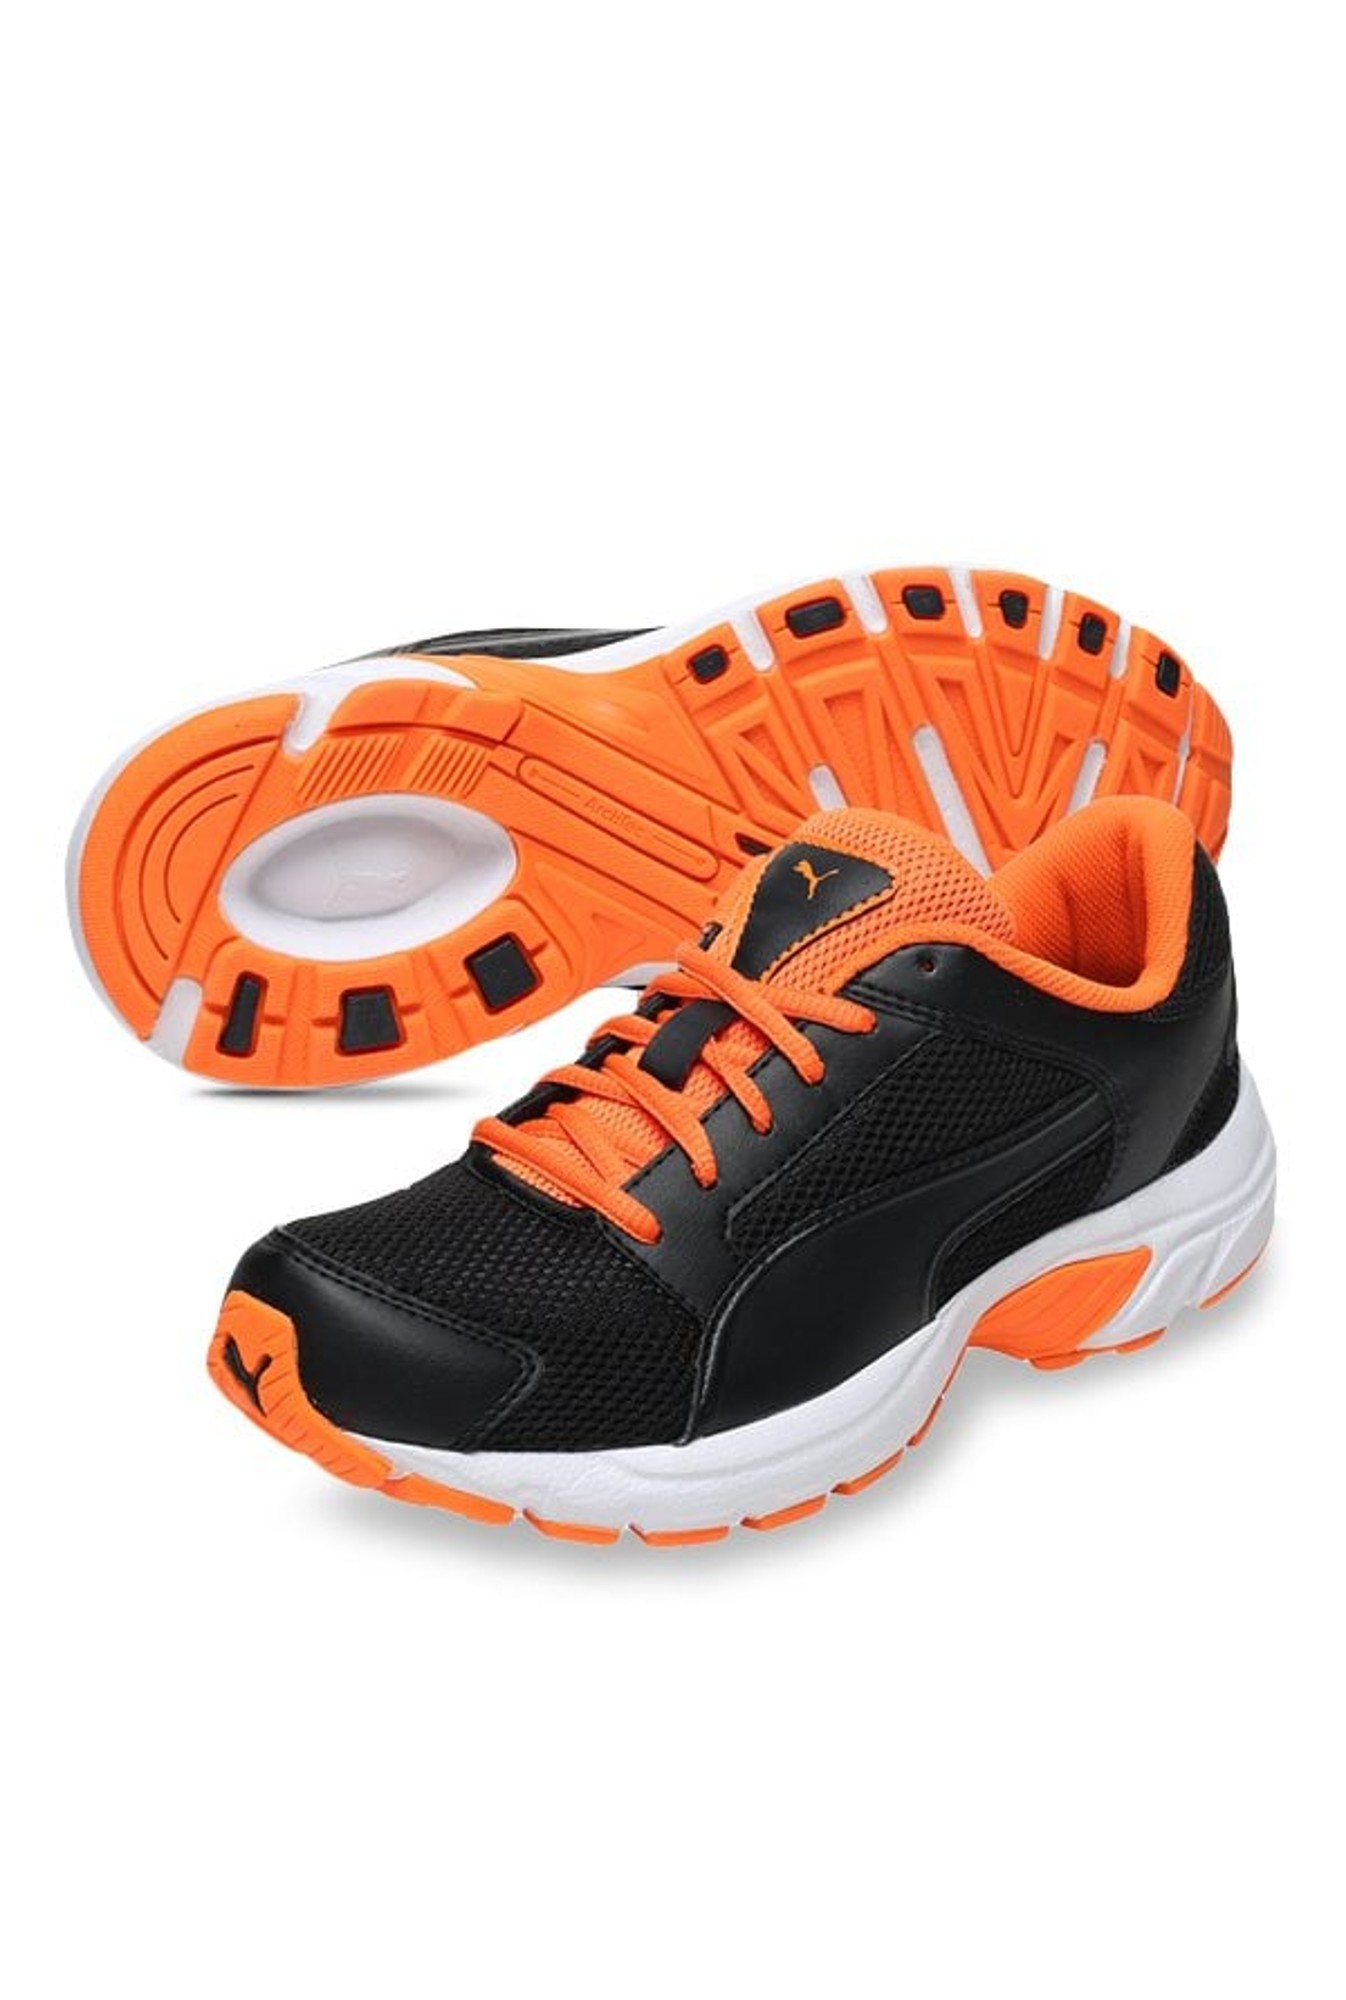 puma splendor dp running shoes